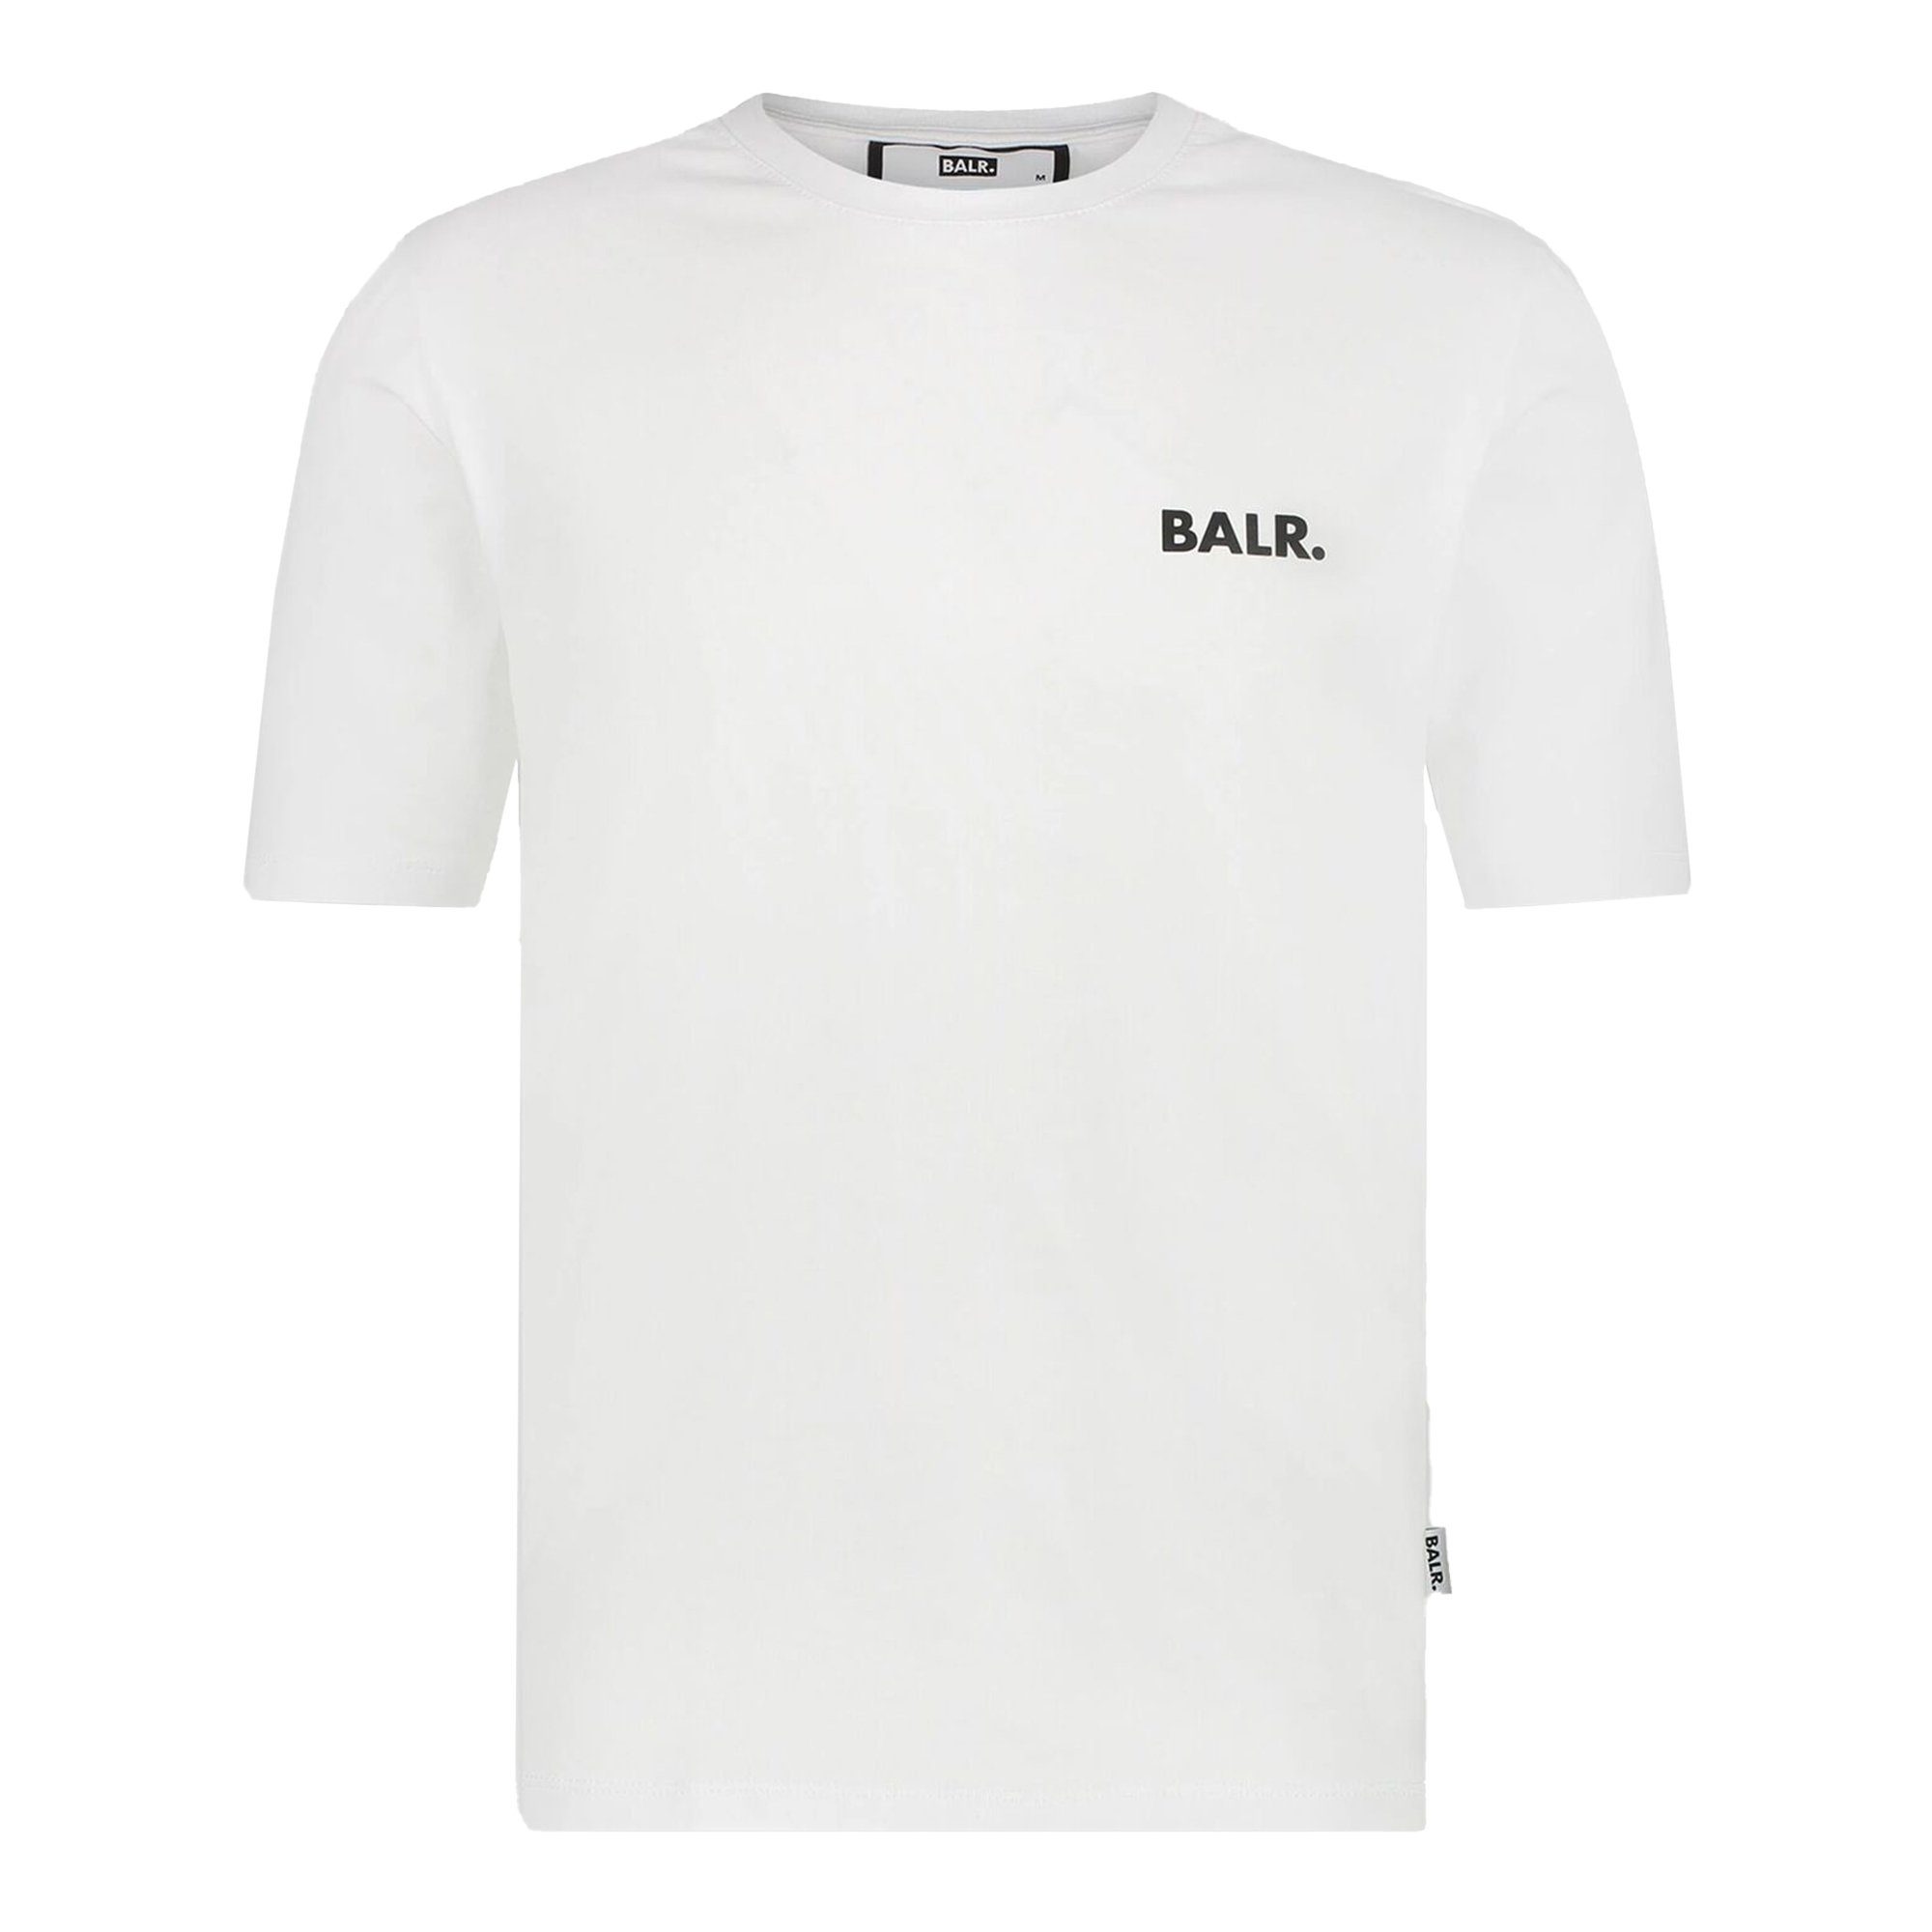 Athletic Small BALR. Chest Branded Herren T-Shirt Weiß - T-Shirt